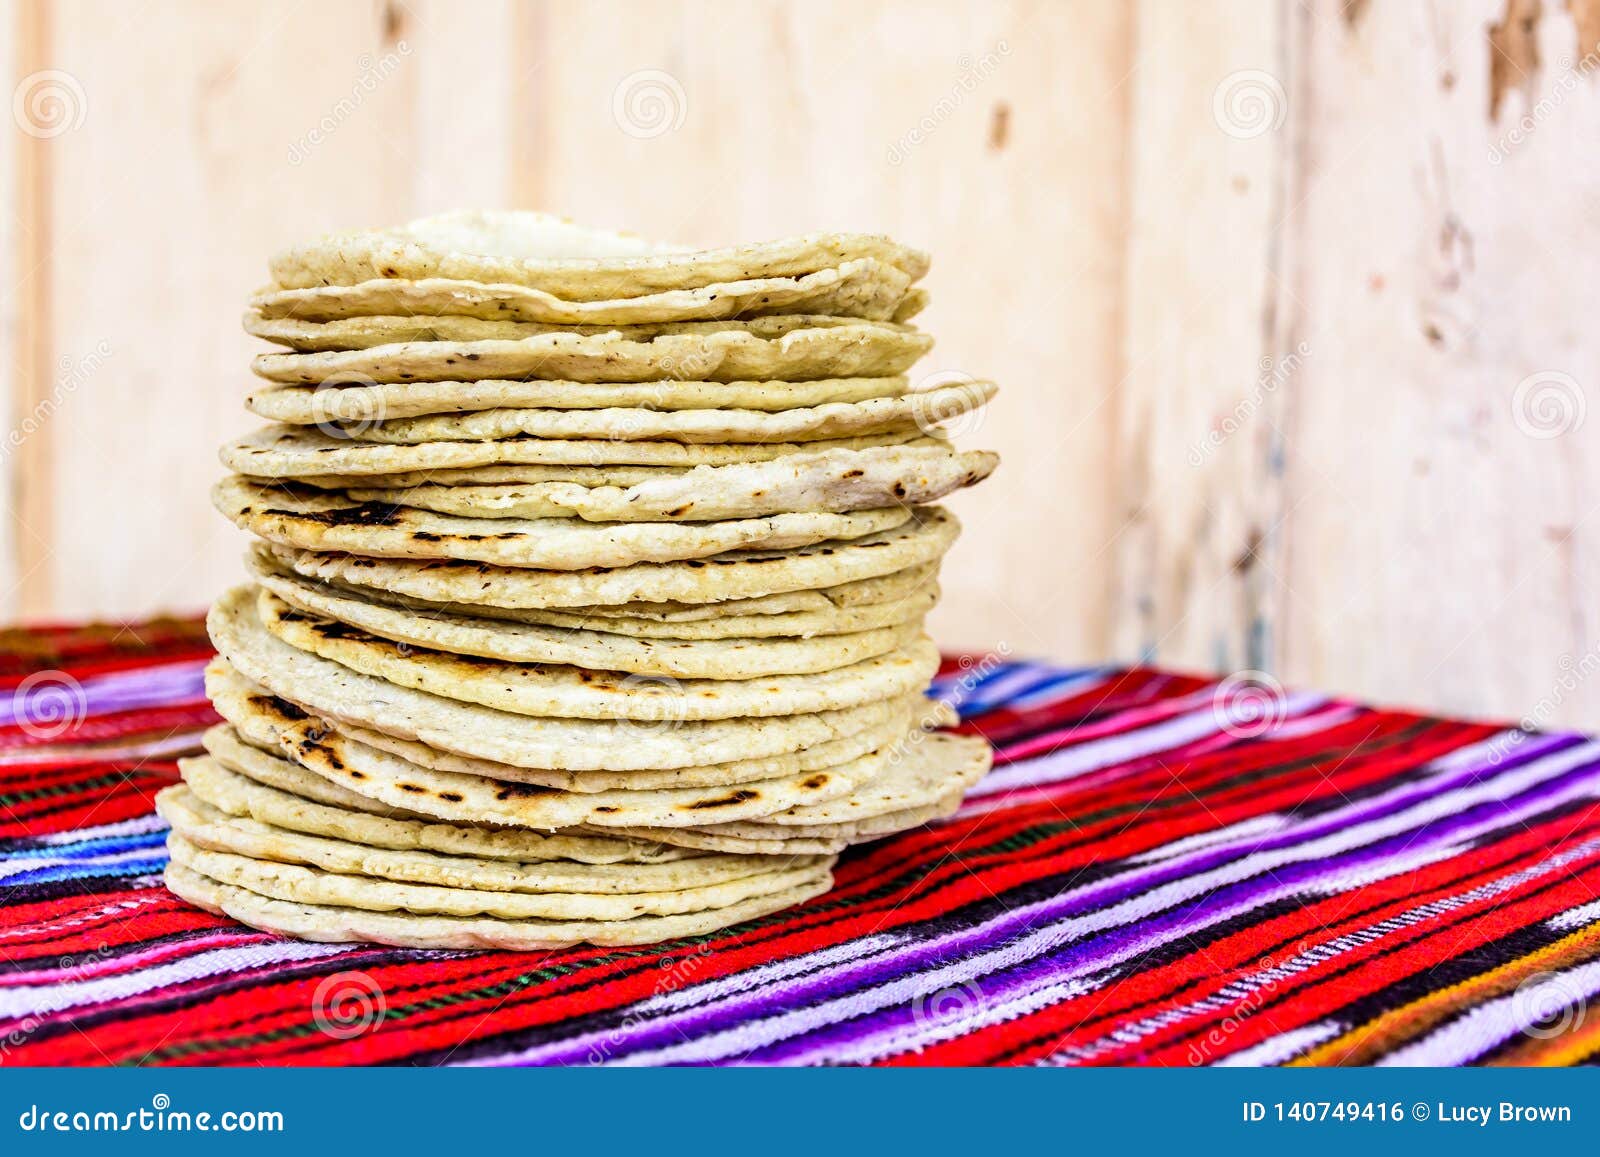 stack of traditional handmade guatemalan corn tortillas